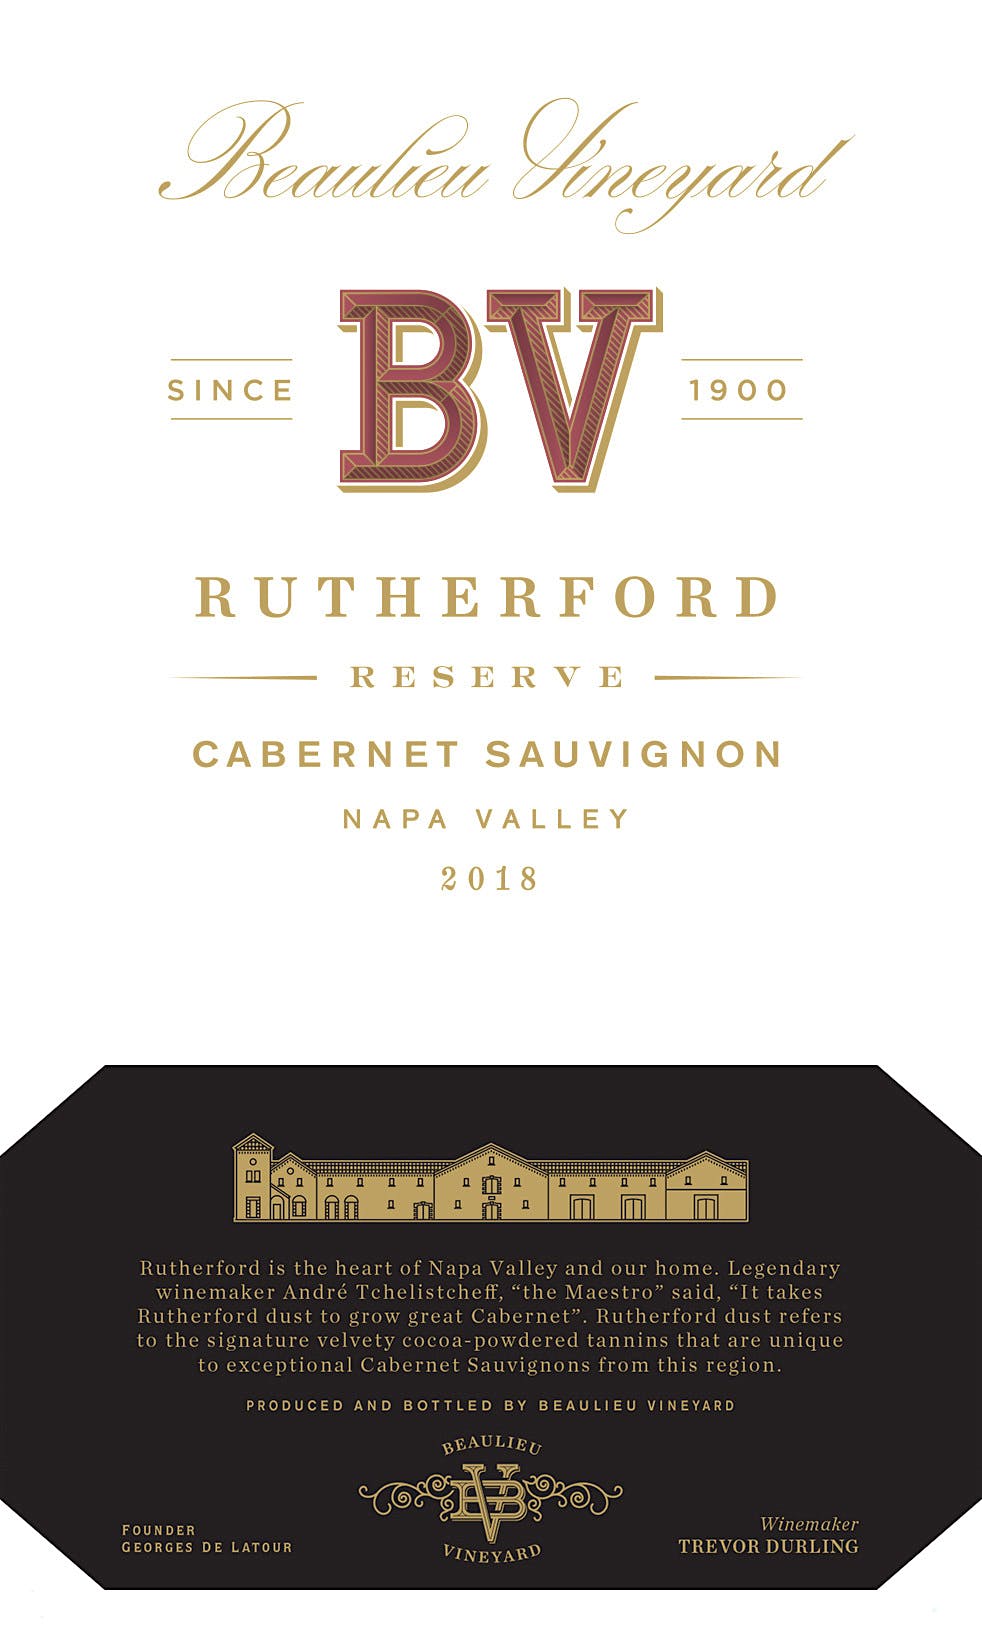 Label for Beaulieu Vineyard